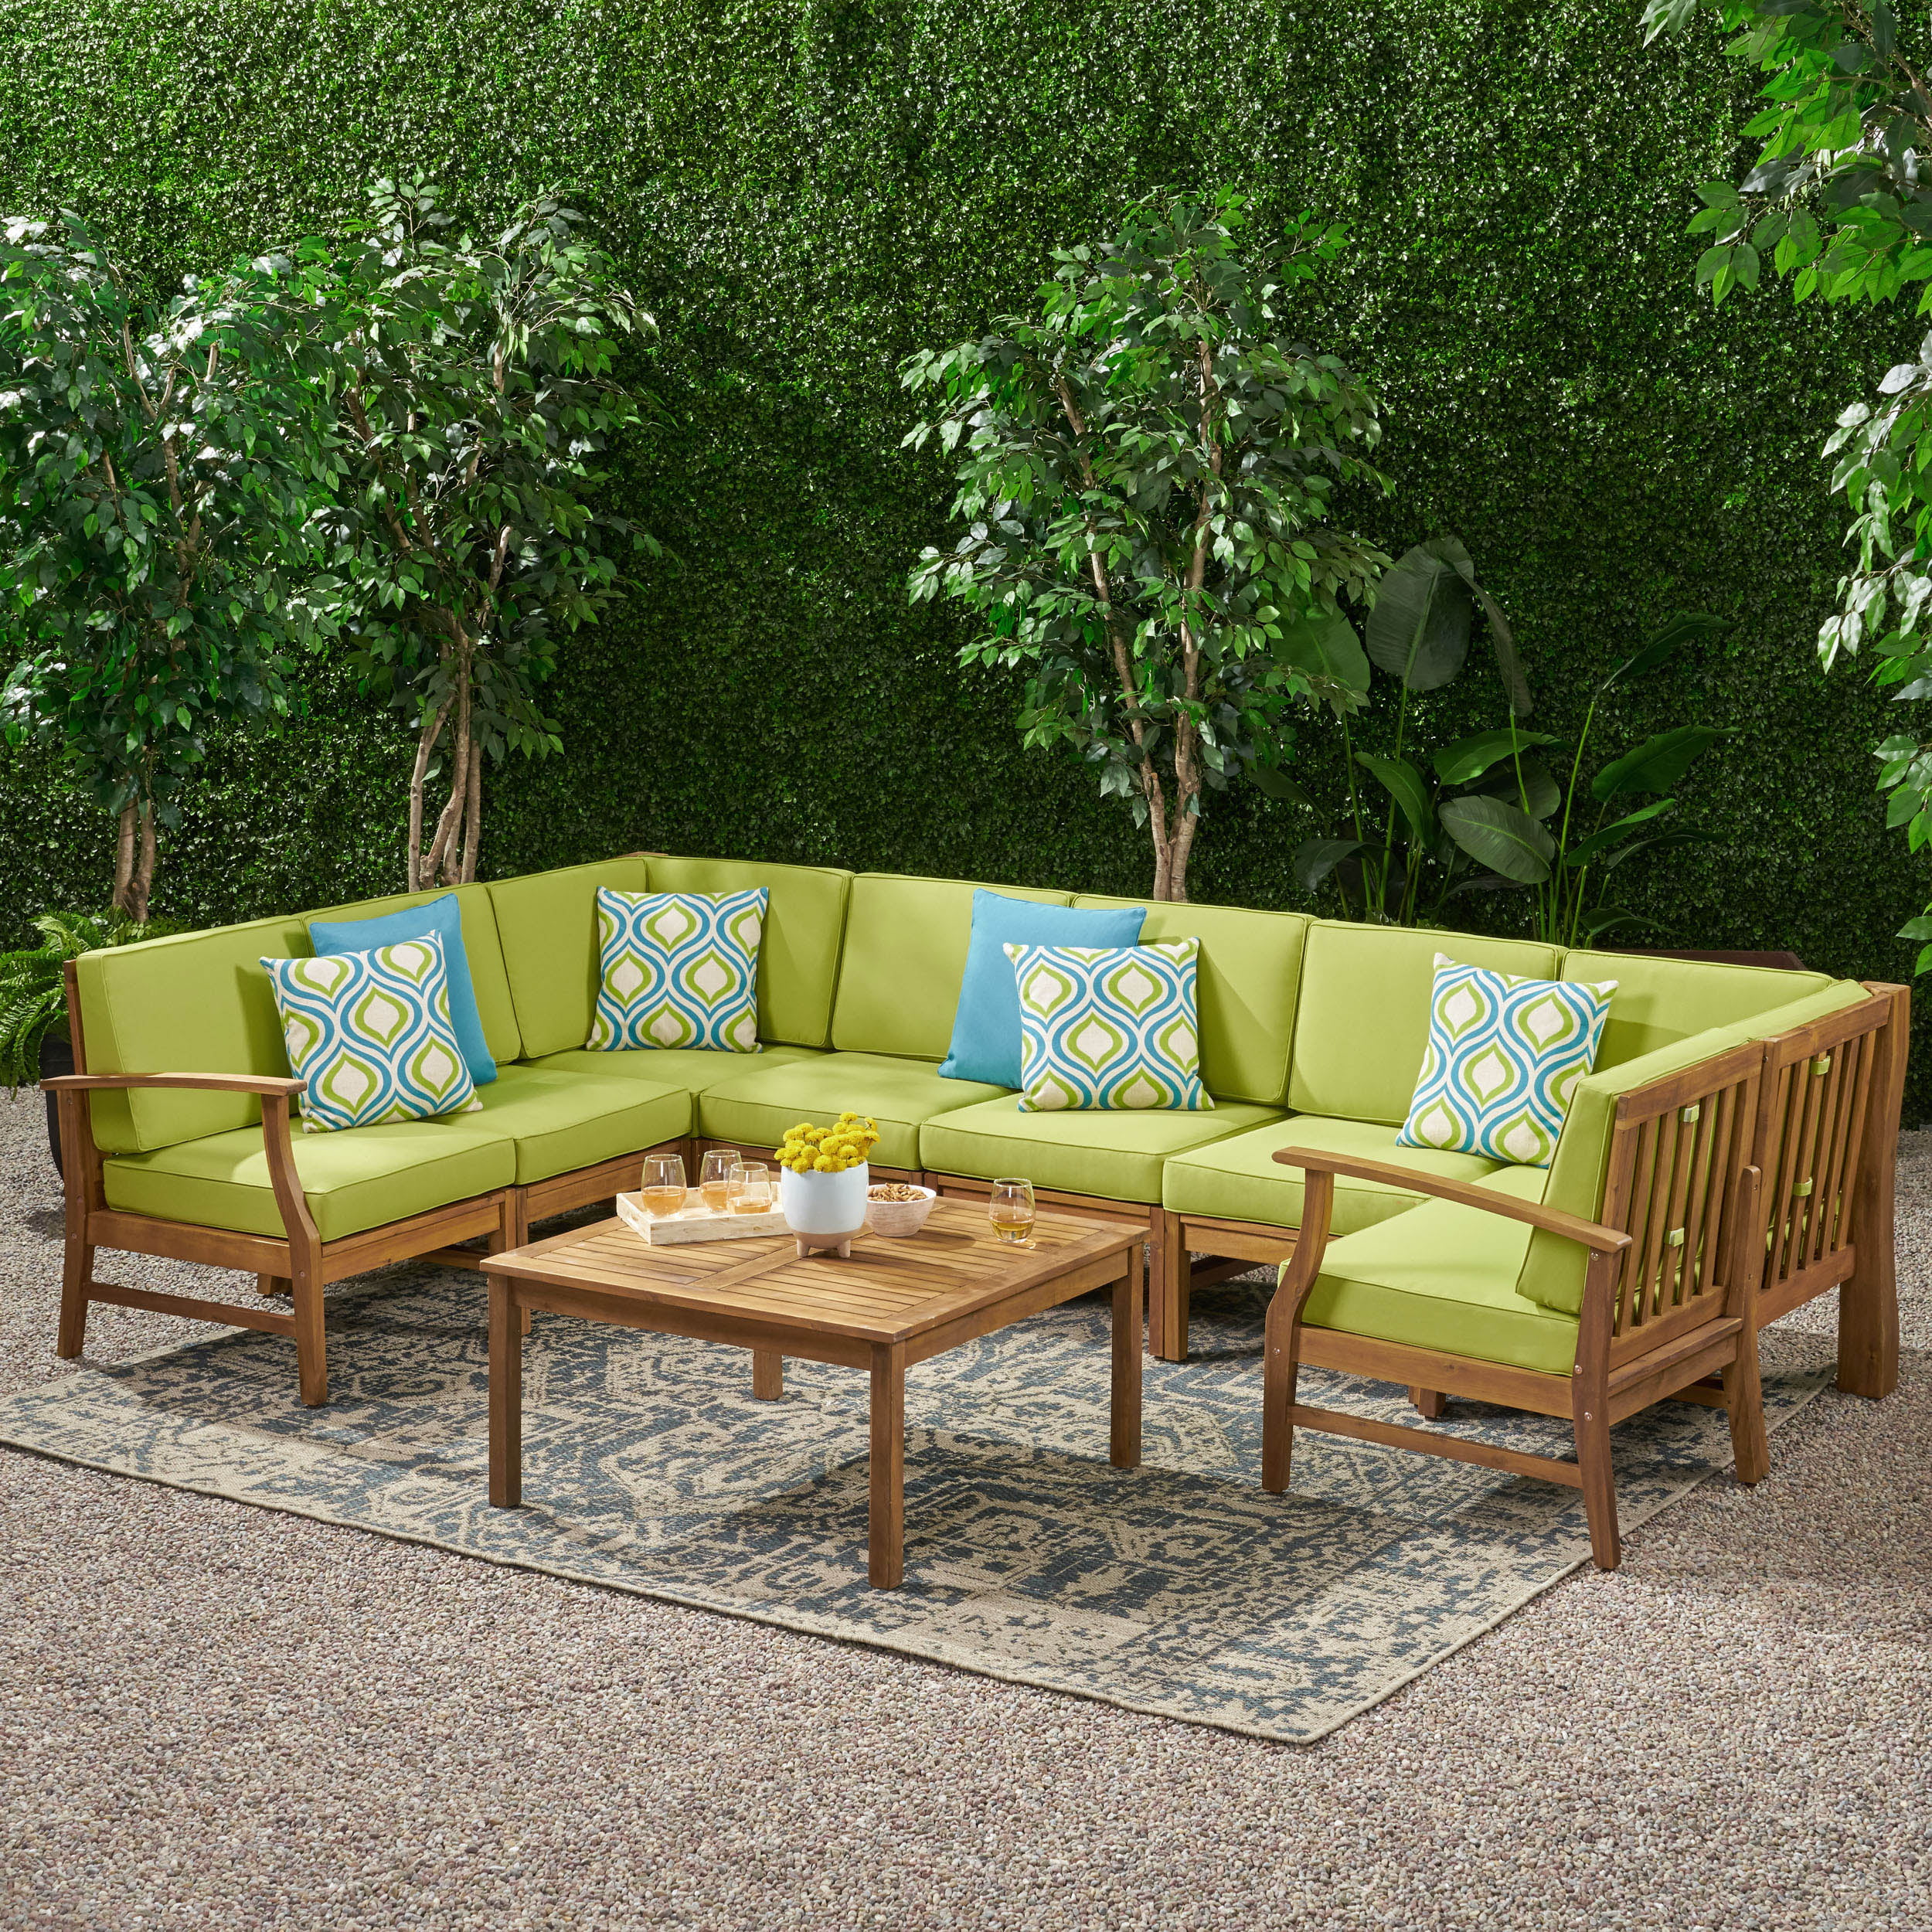 Durable Teak Outdoor Furniture Options